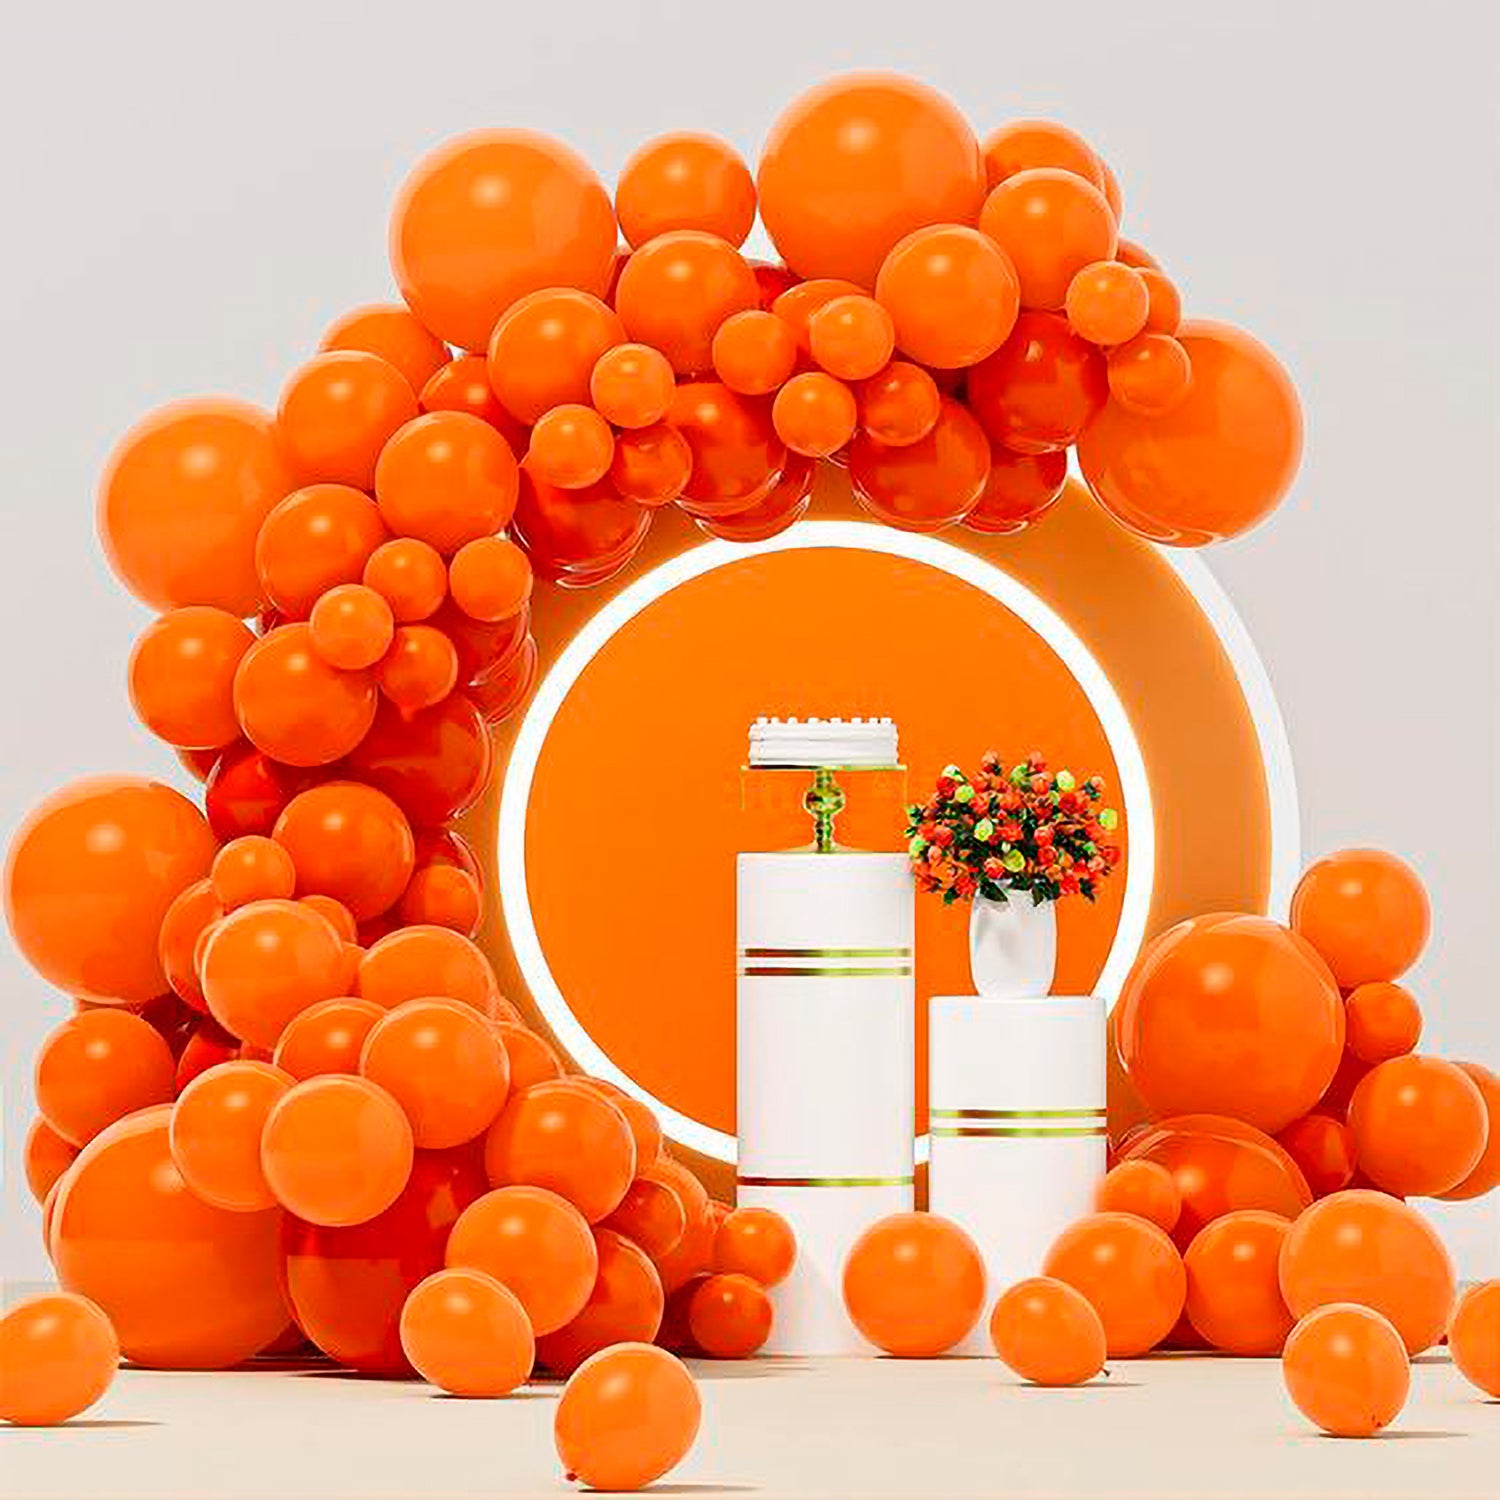 72" giant bright orange wholesale balloon decoration